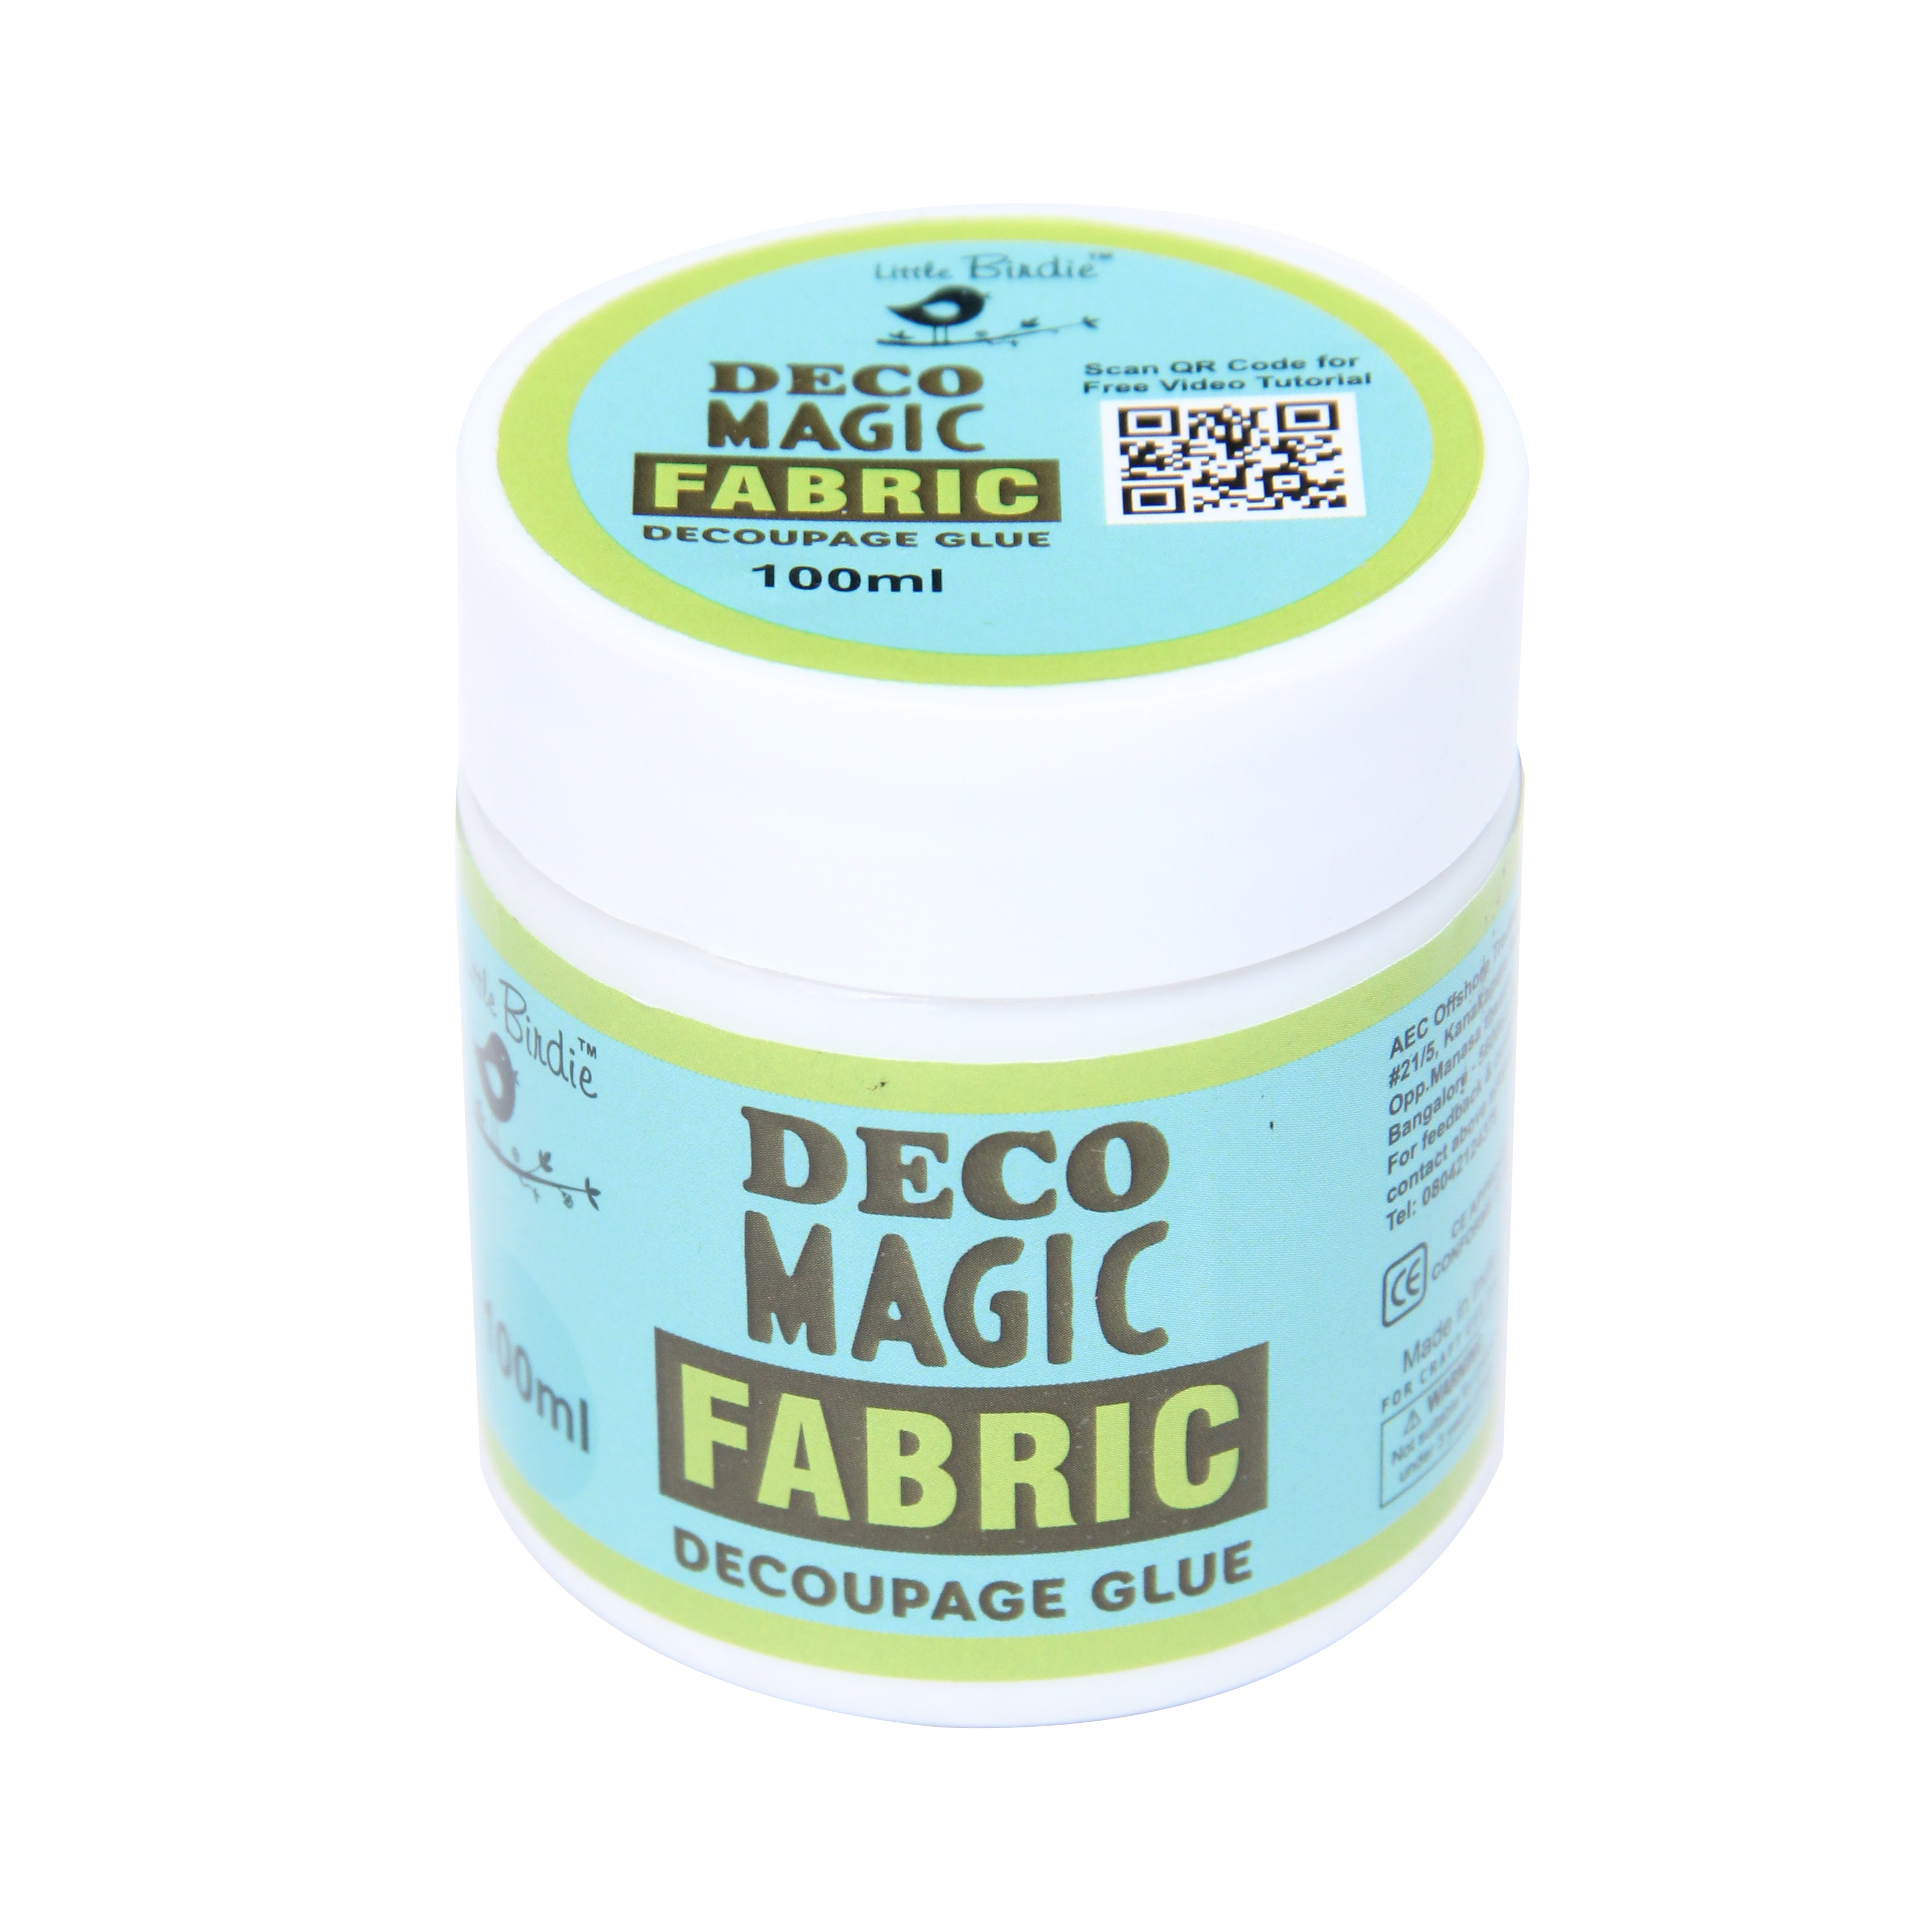 Deco Magic Fabric Decoupage Glue 100ml